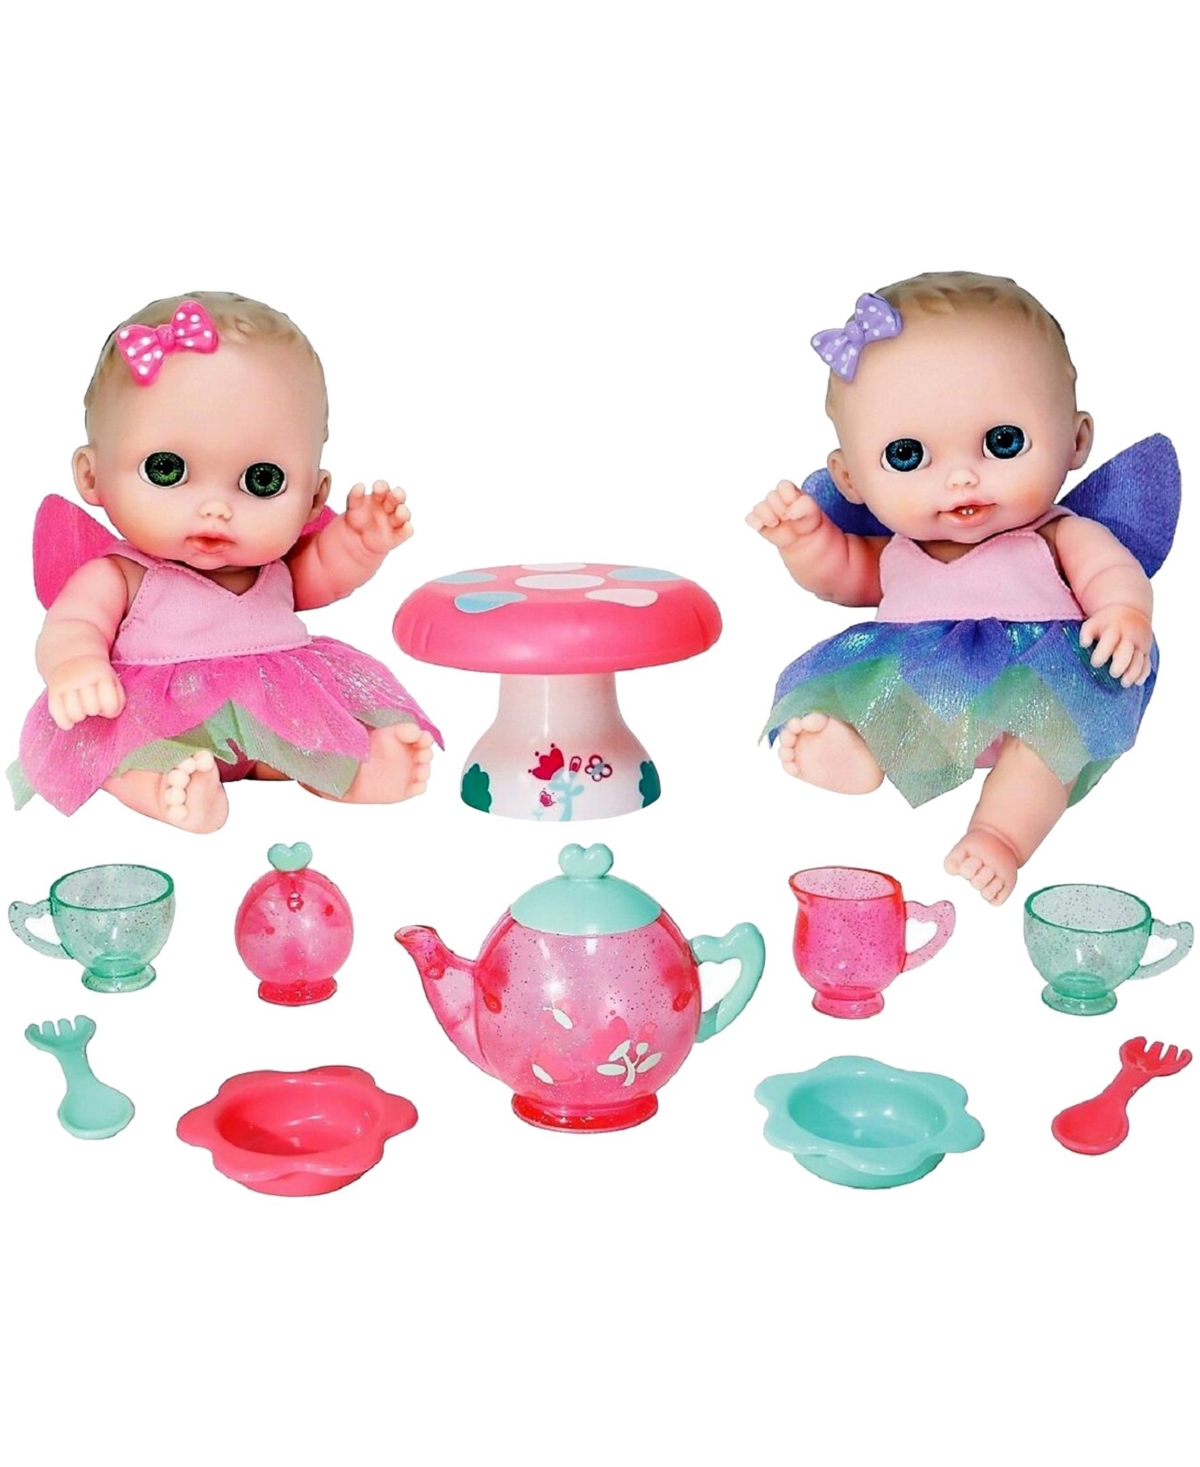 Jc Toys Lil' Cutesies Twins 8.5" All Vinyl Dolls Fairy Tea Set In Twin Fairy - Multicolor